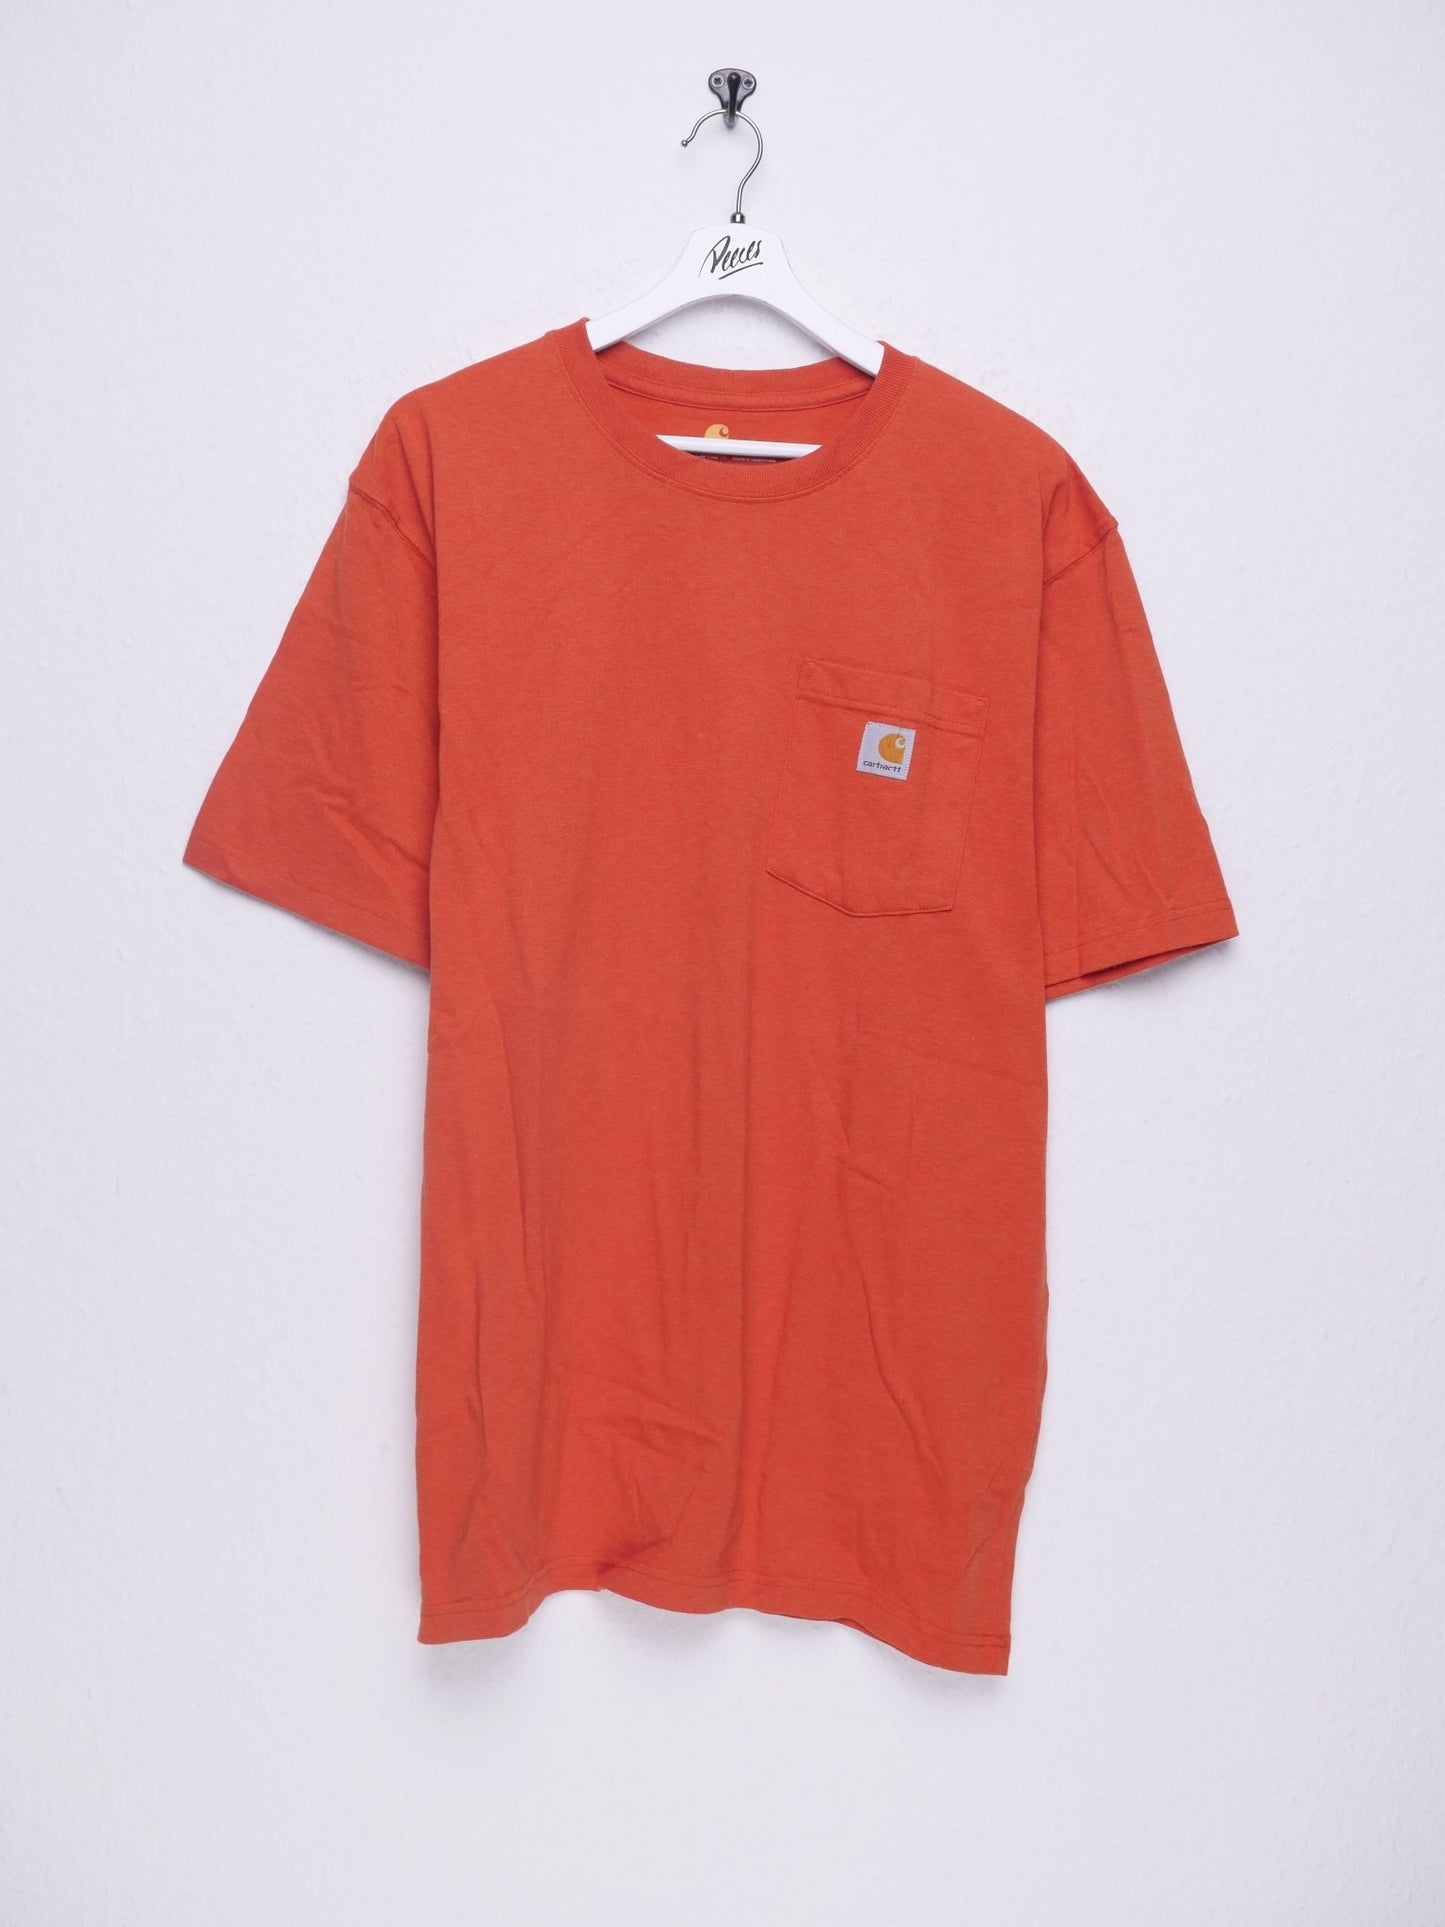 Carhartt embroidered Logo orange Shirt - Peeces